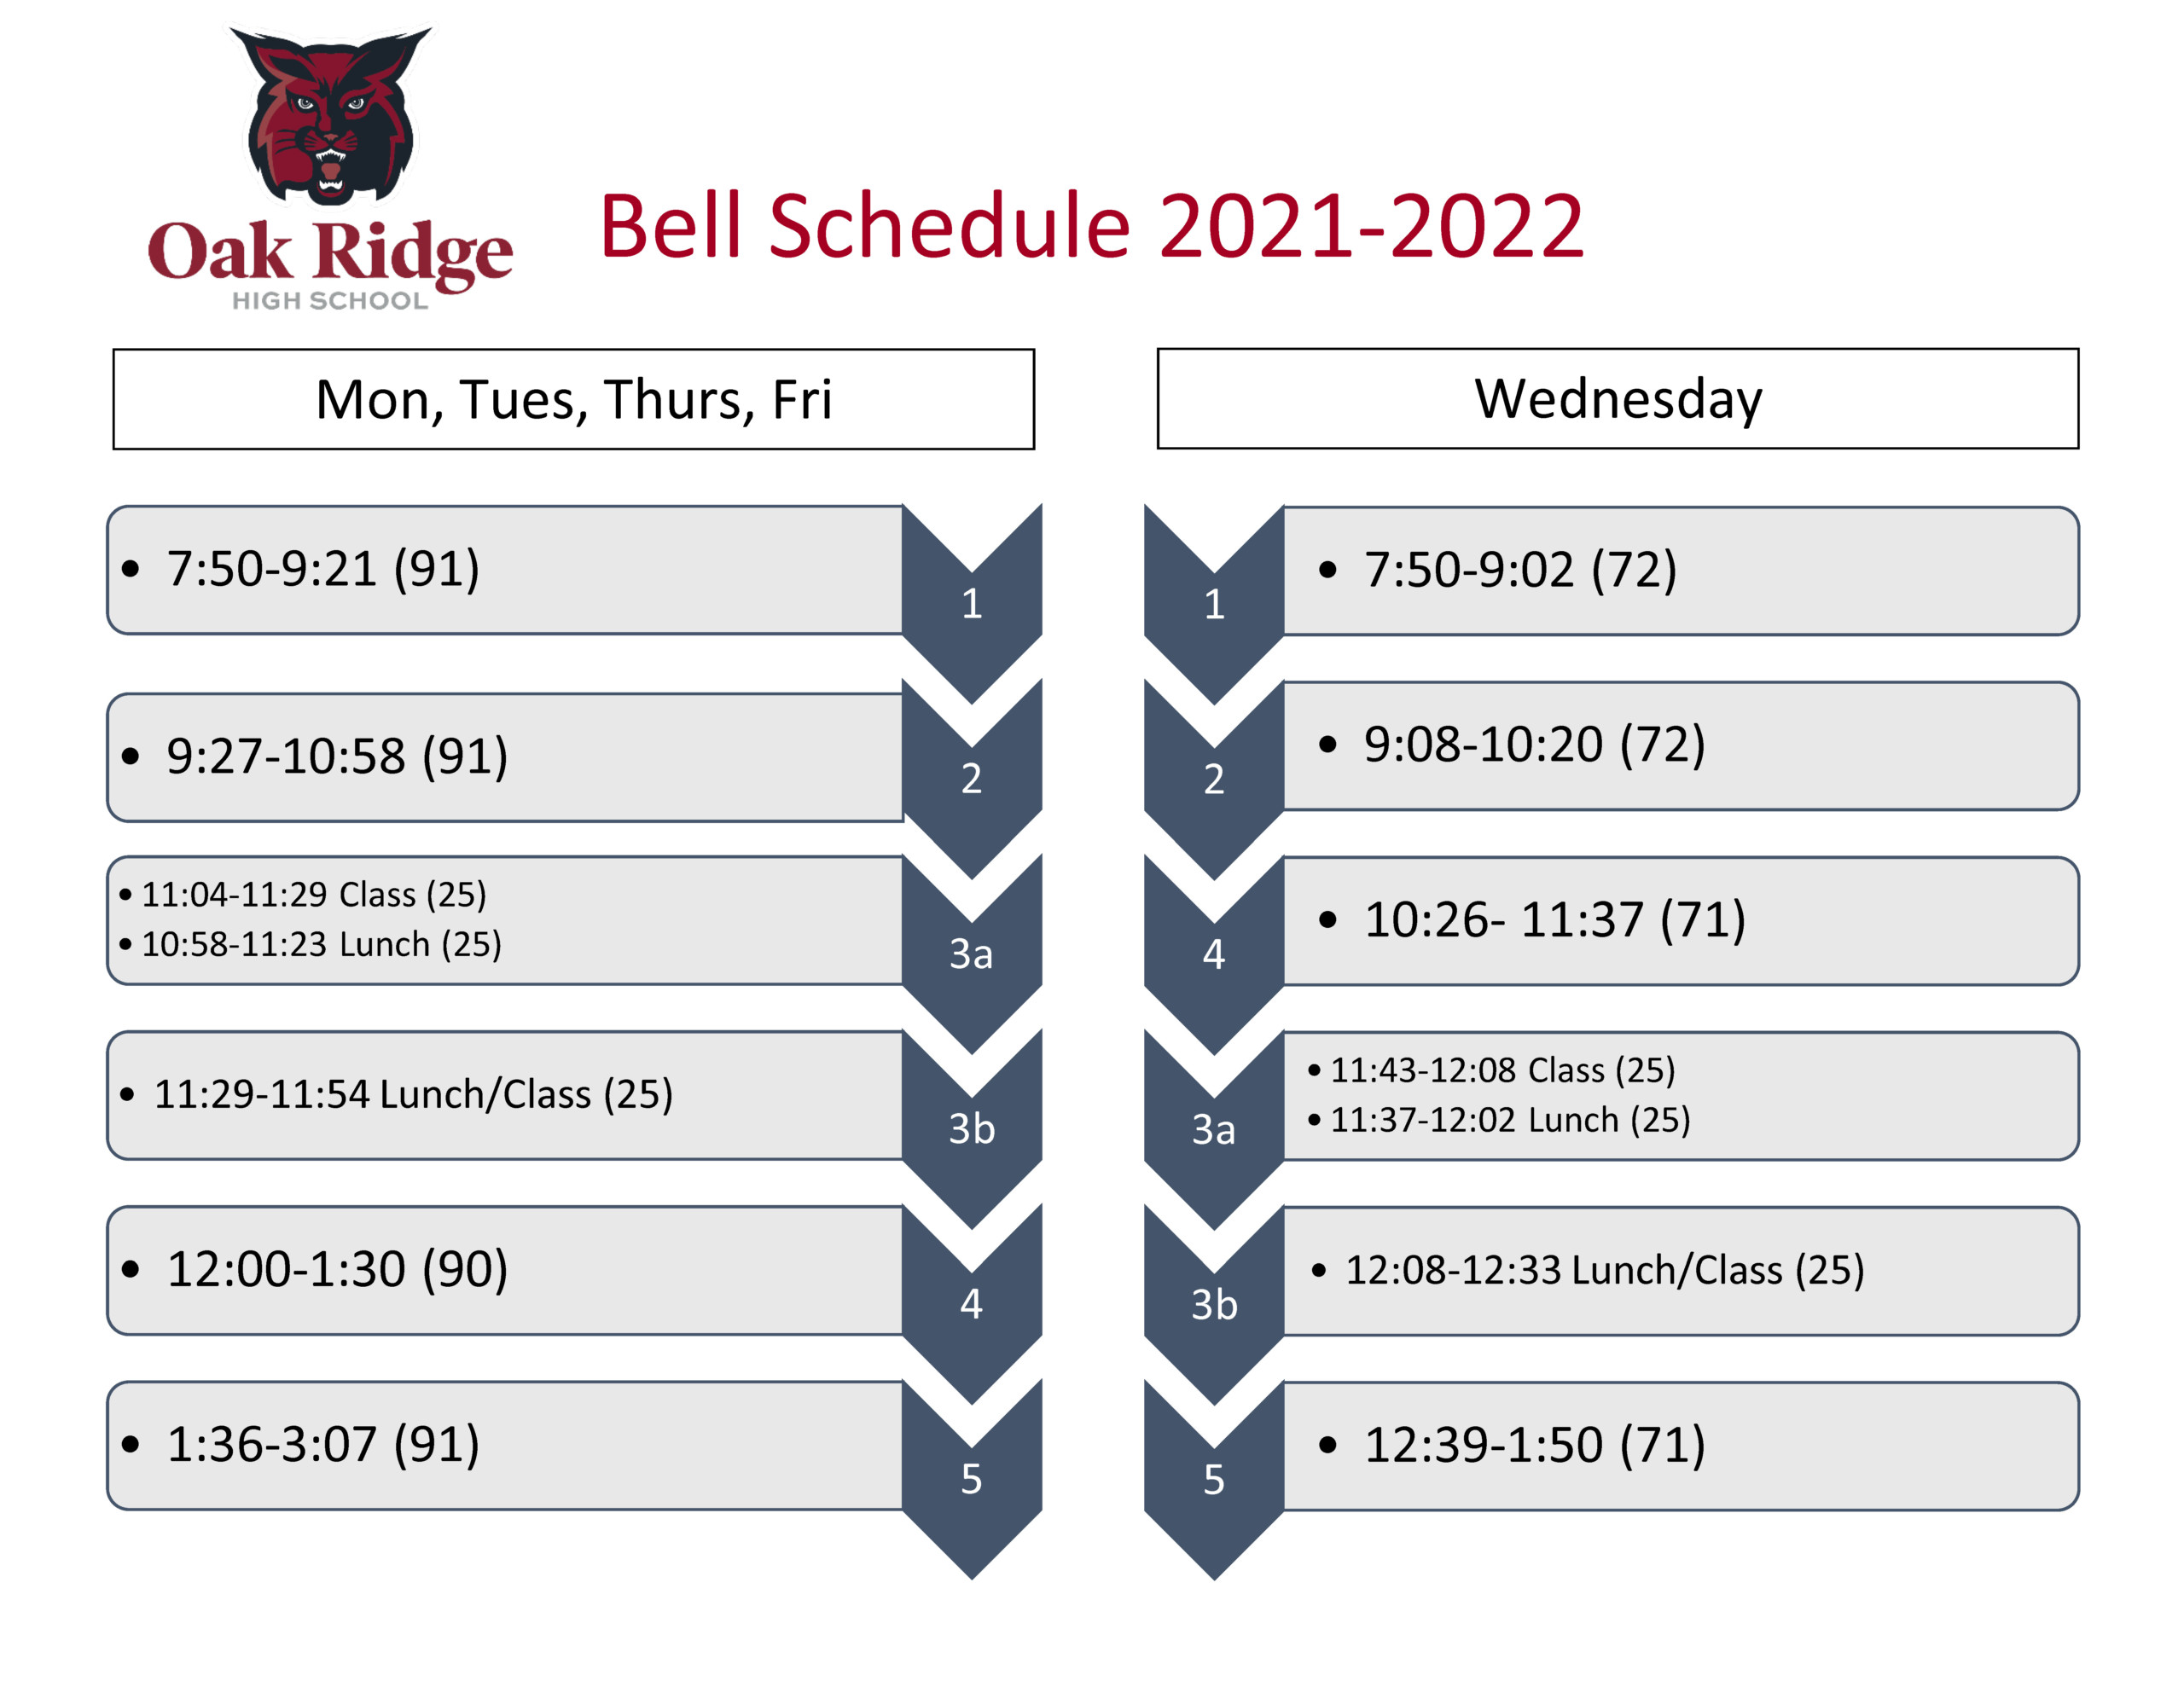 Bell Schedule - Oak Ridge High School